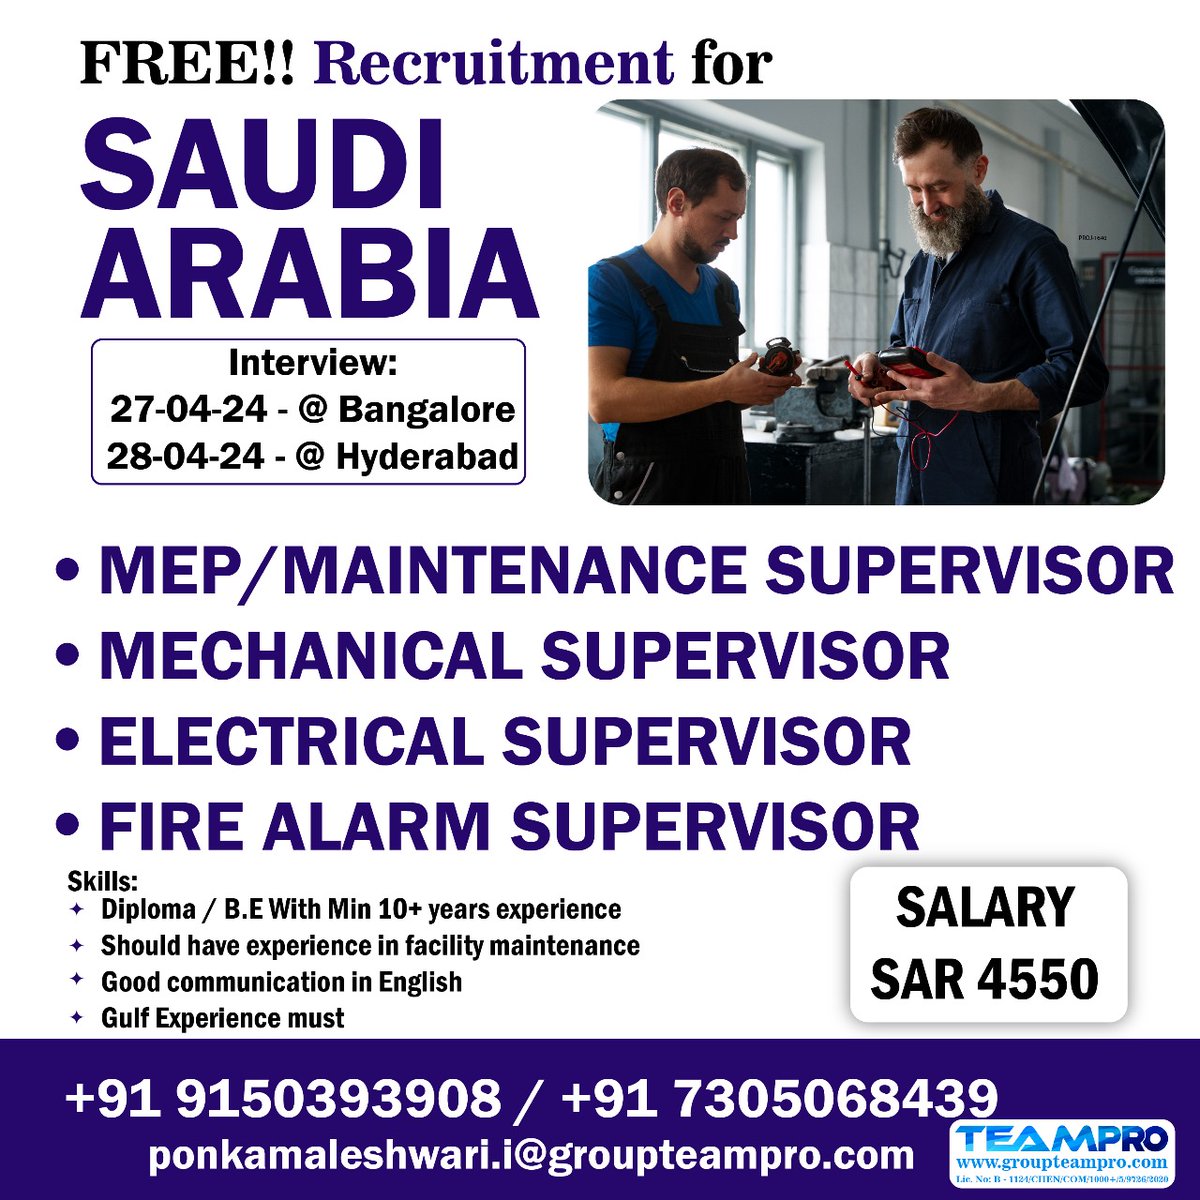 #freerecruitment #saudijobs #saudijobseekers #supervisor #facilitymaintenance #mechanical #electrical #firealarm #electrical #shortlistingunderprogress #directinterview #immediatejoiners